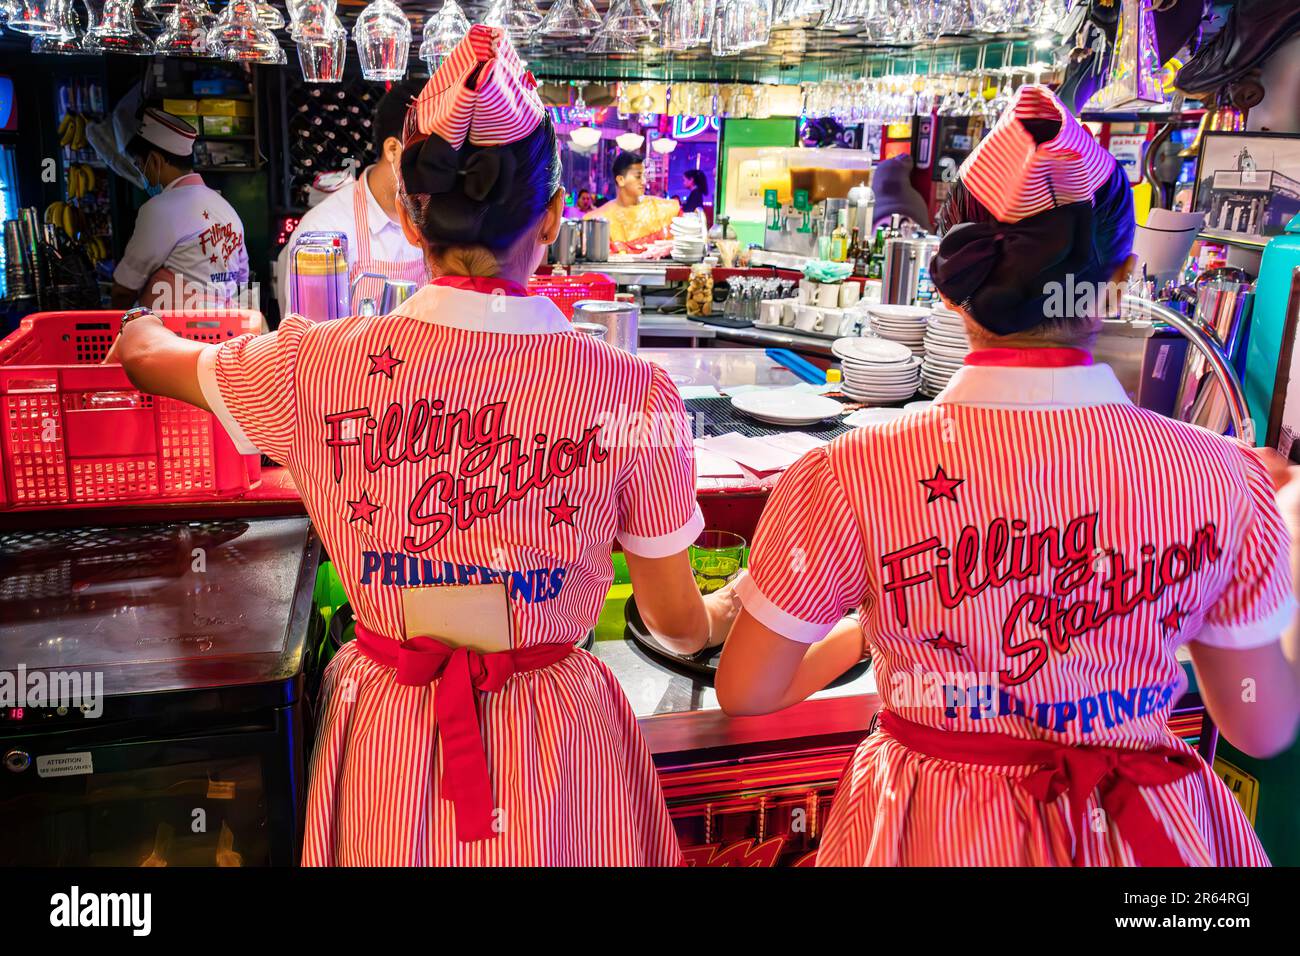 Filling Station, fifties American diner, P.Burgos street, Makati, Manila, Philippines Stock Photo